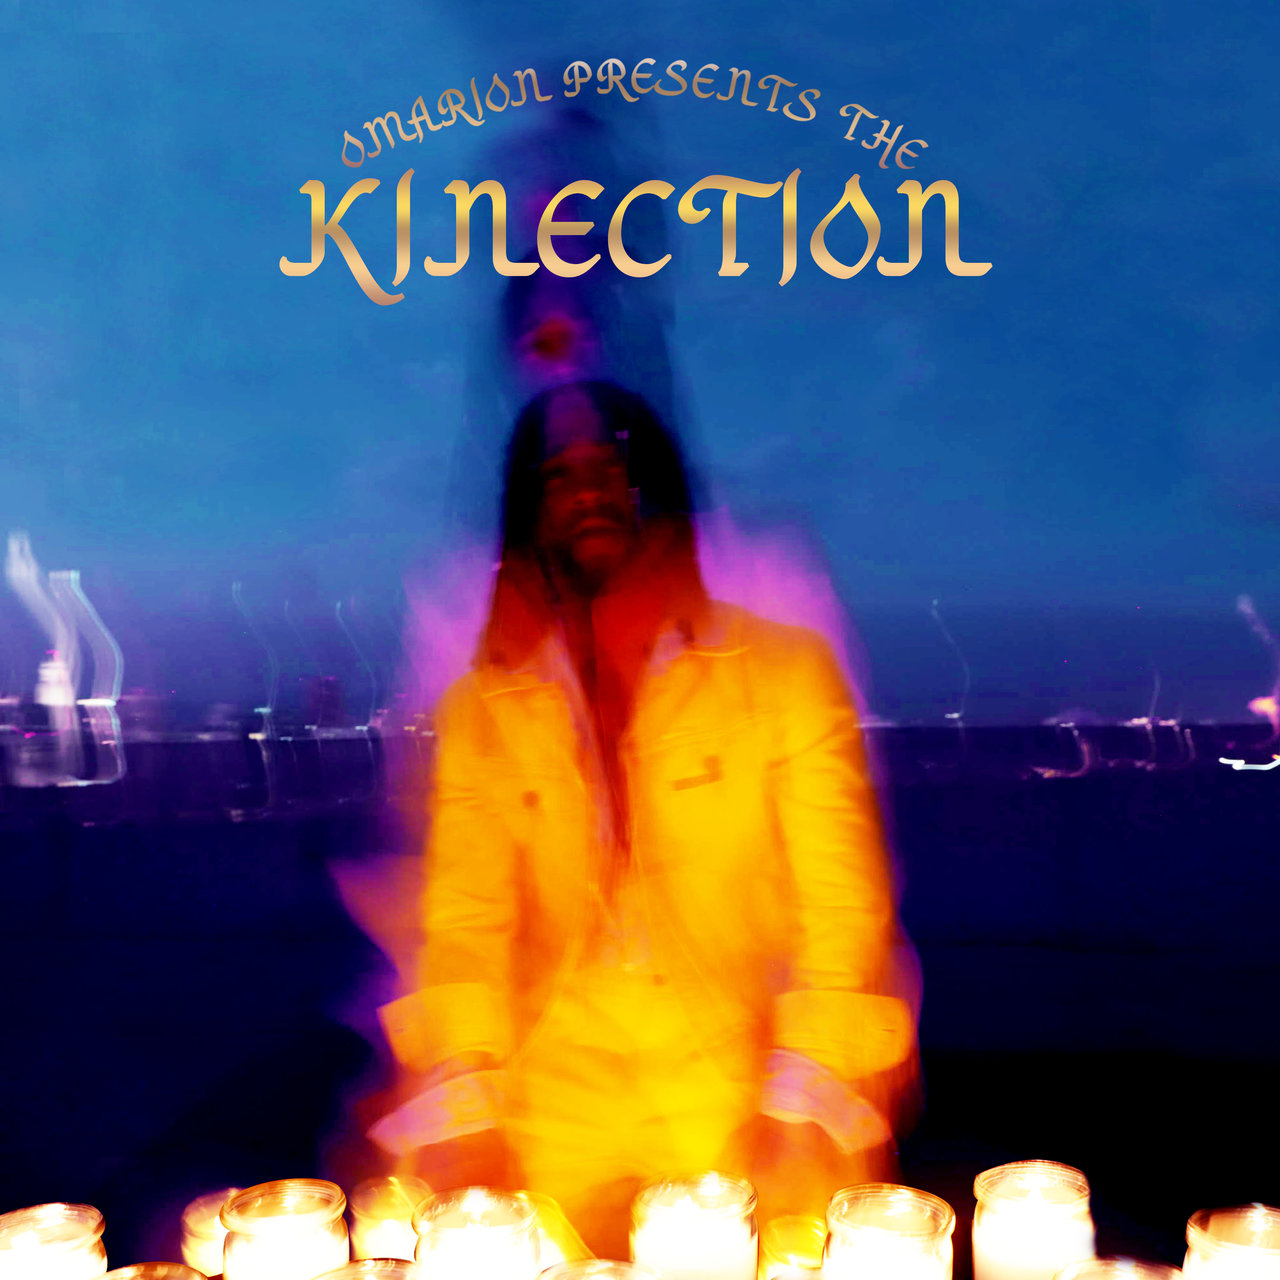 Omarion Releases New Album "The Kinection" (Album Stream)